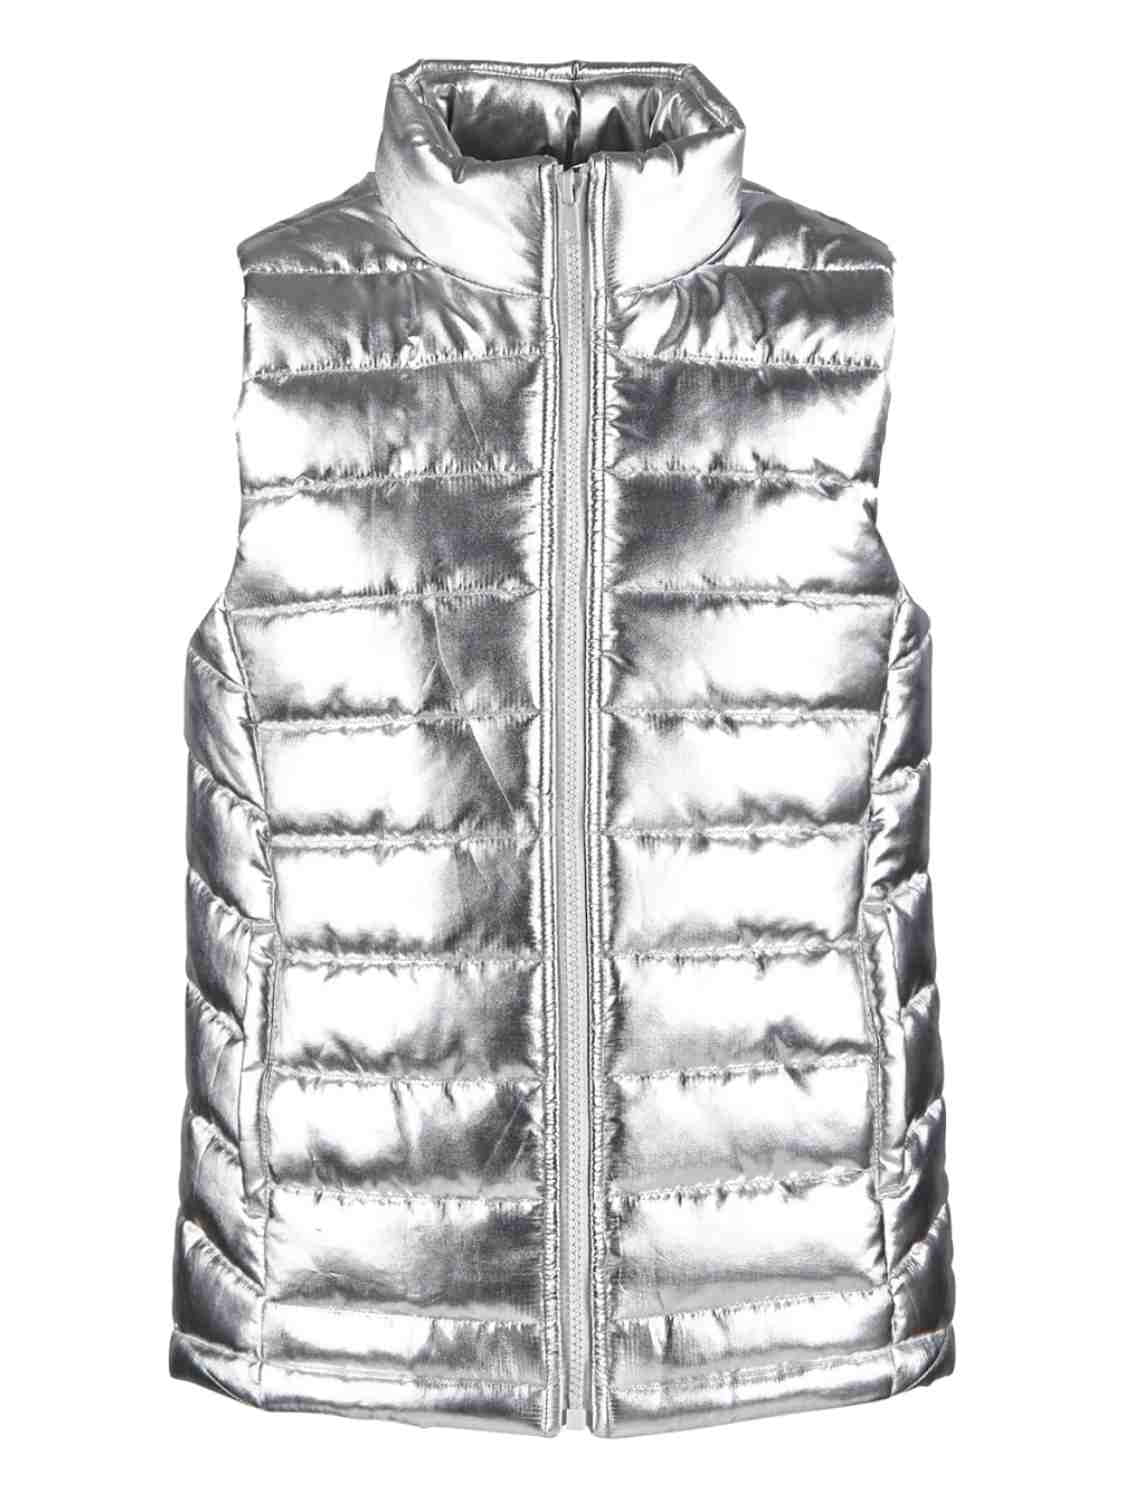 Toddler & Girls Shiny Metallic Silver Puffer Jacket Vest 6 - Walmart.com